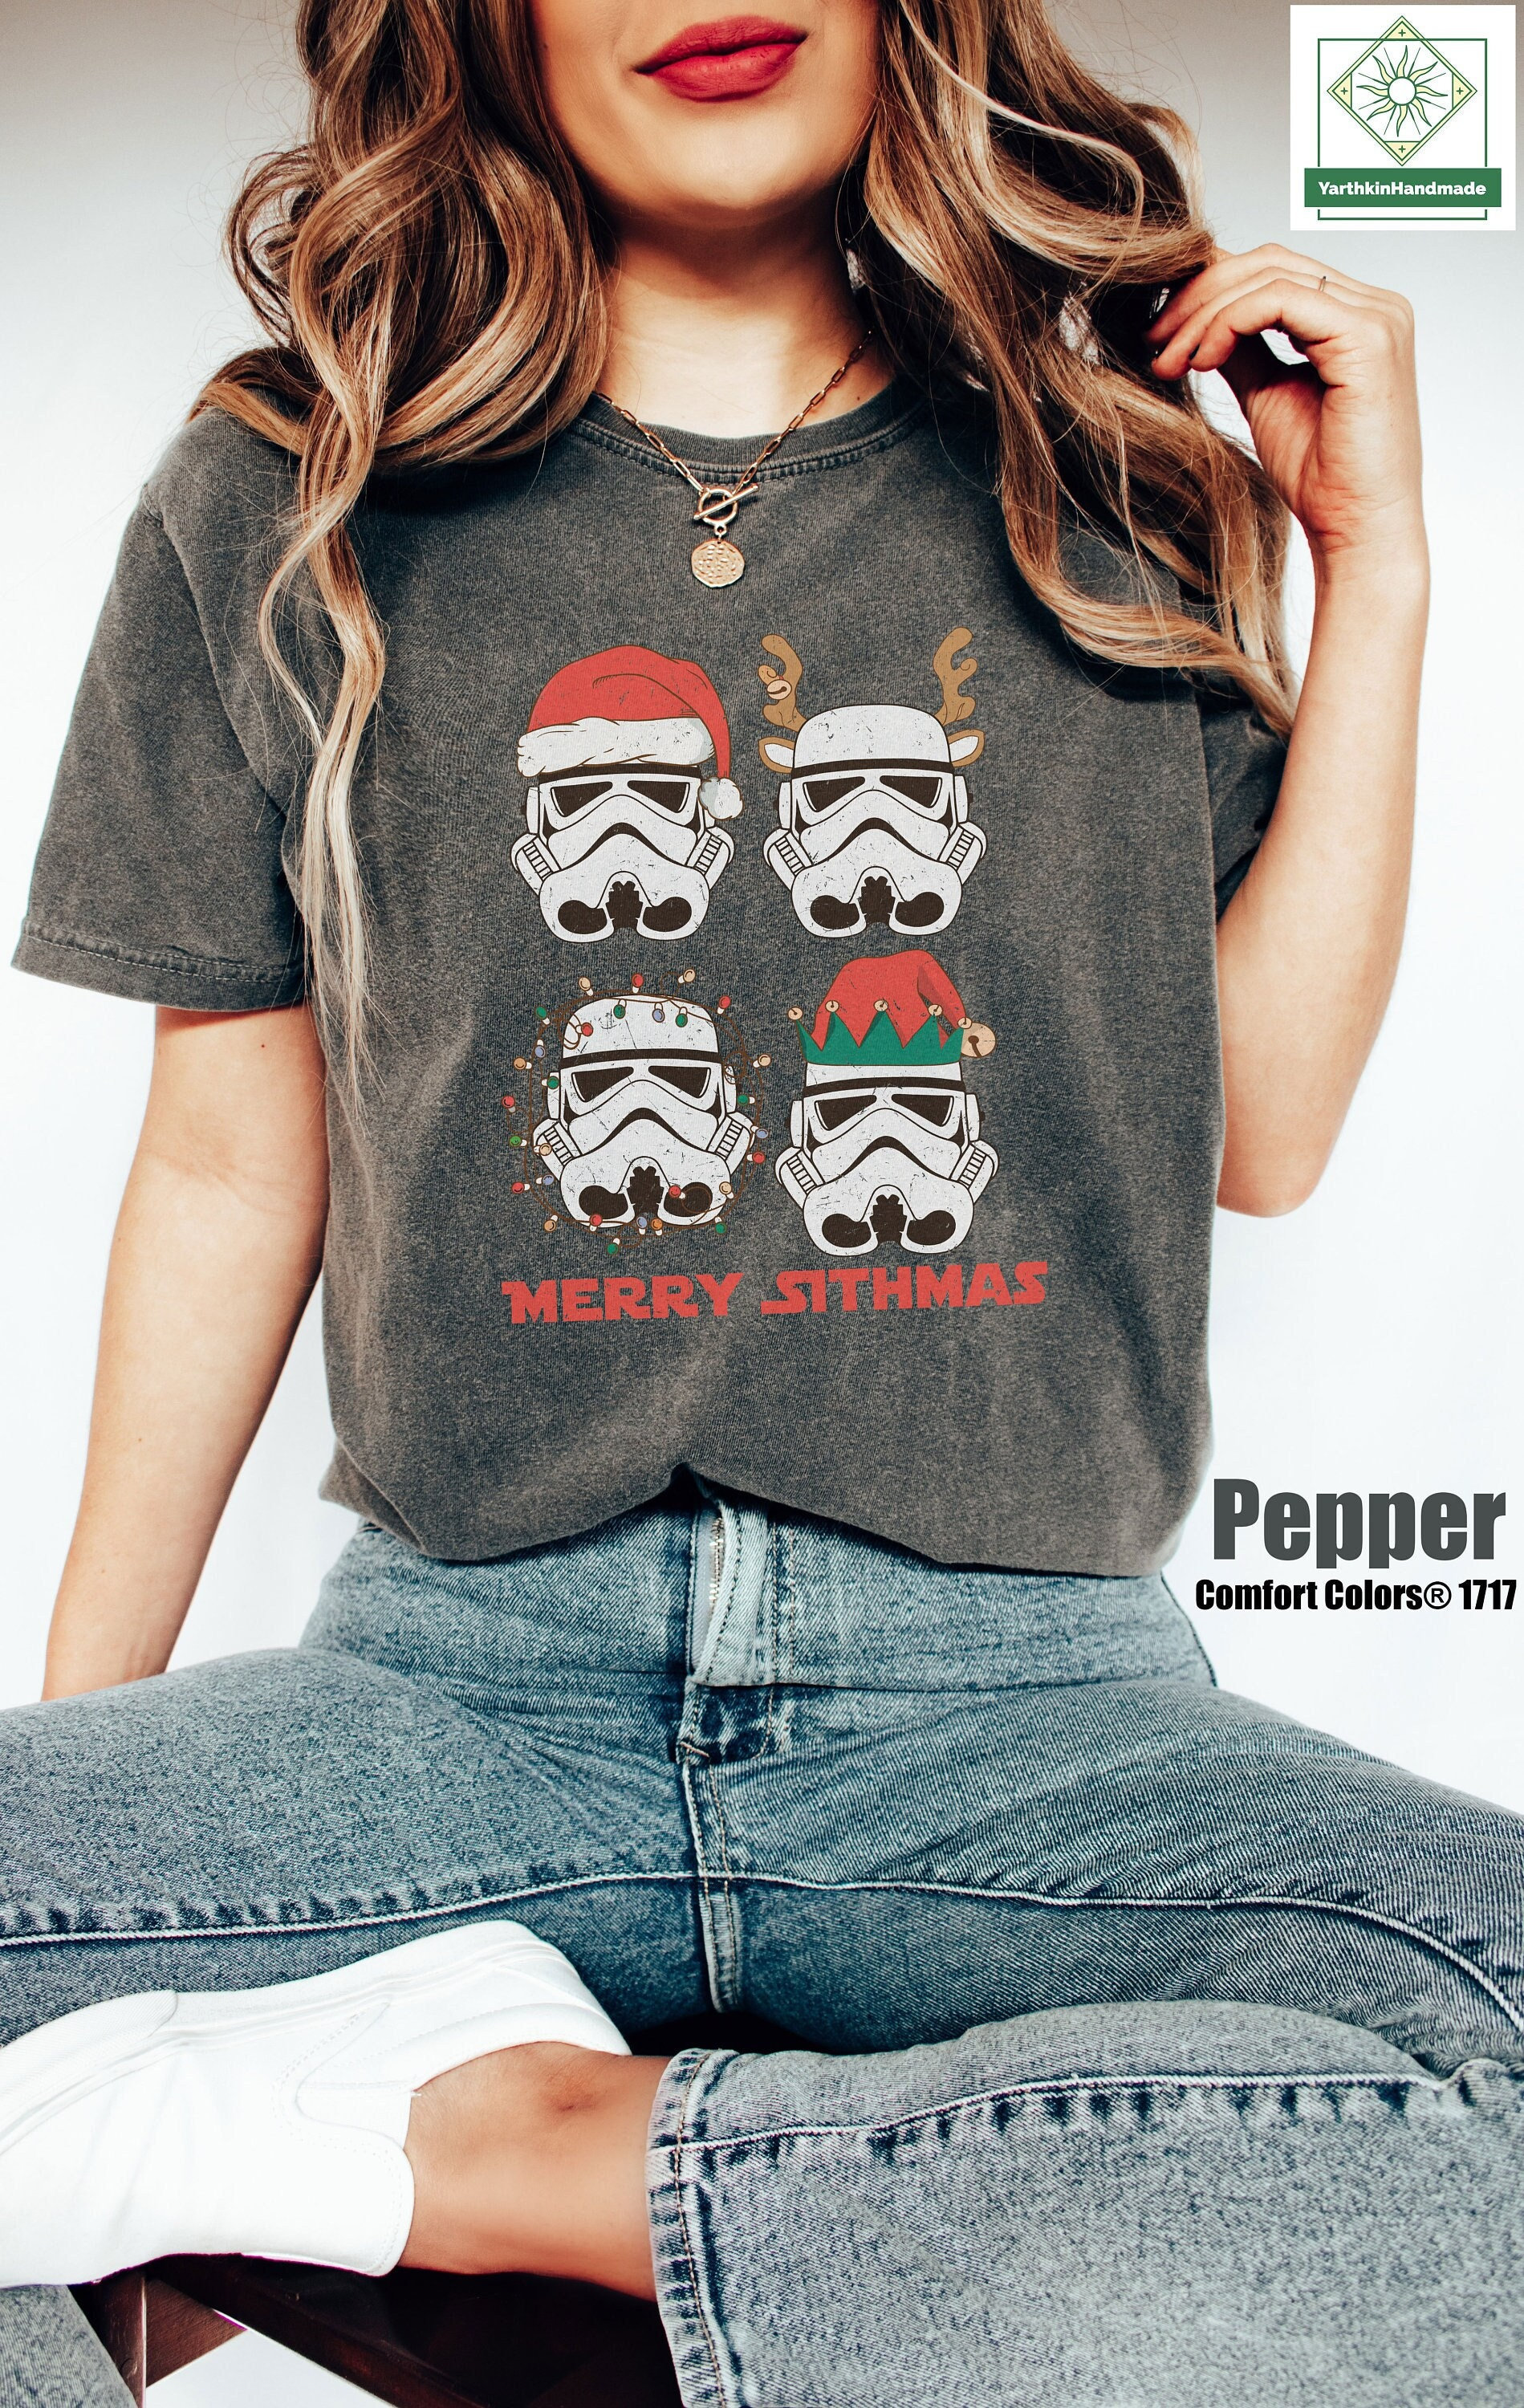 Discover Retro Star Wars Merry Sithmas Shirt, Stormtrooper Christmas Shirt, Vintage Star Wars Christmas Shirt, Disney Star Wars Shirt